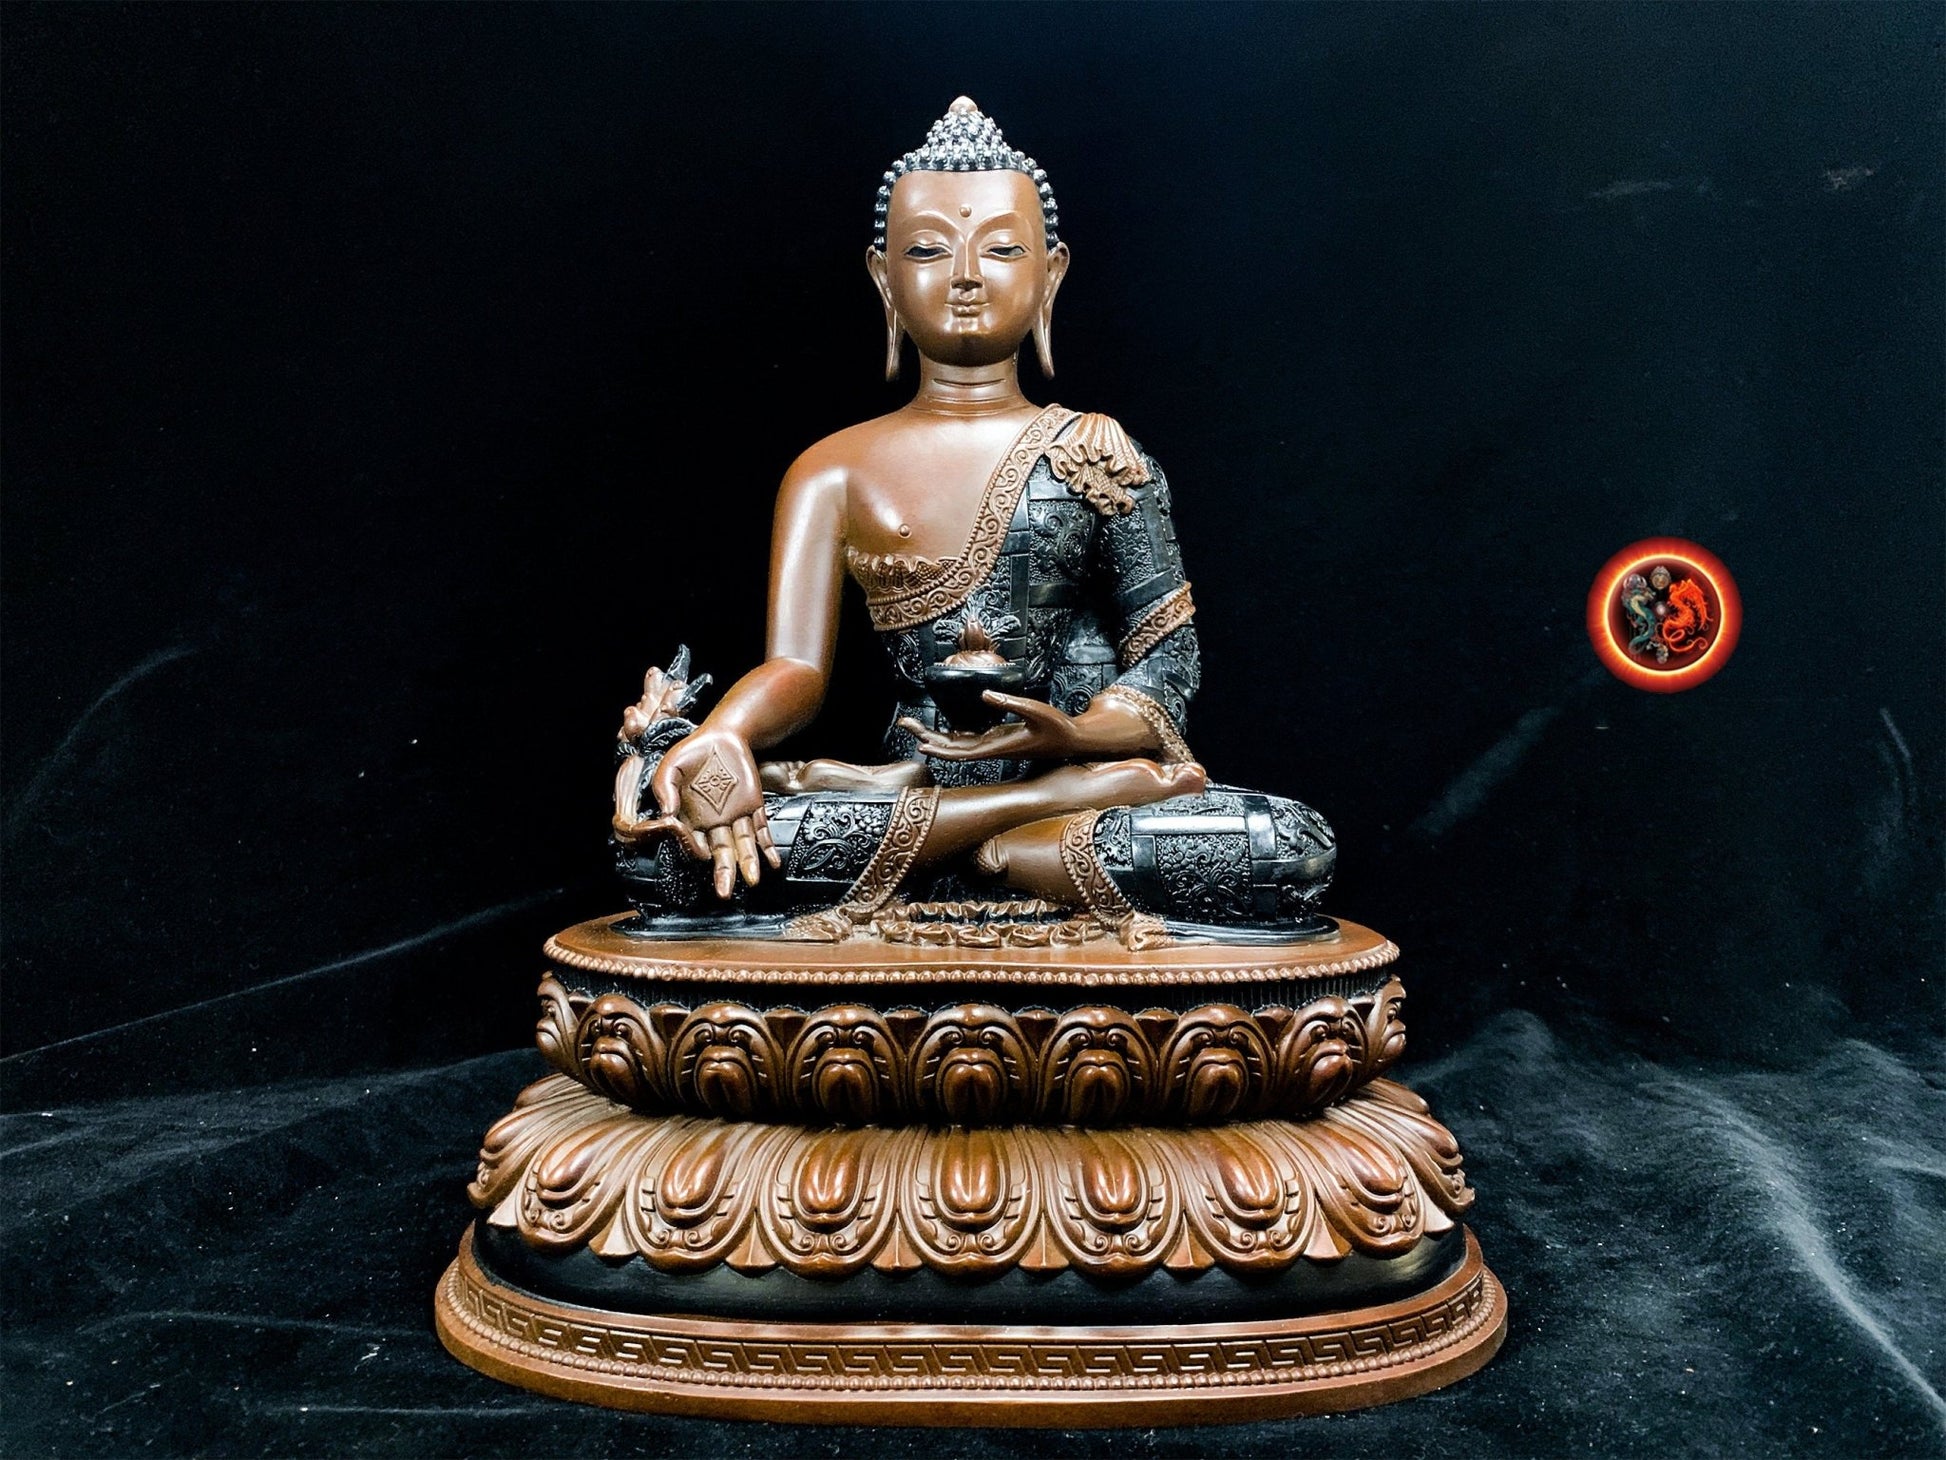 exceptionnelle statue statuette bouddhiste. Bouddha médecine